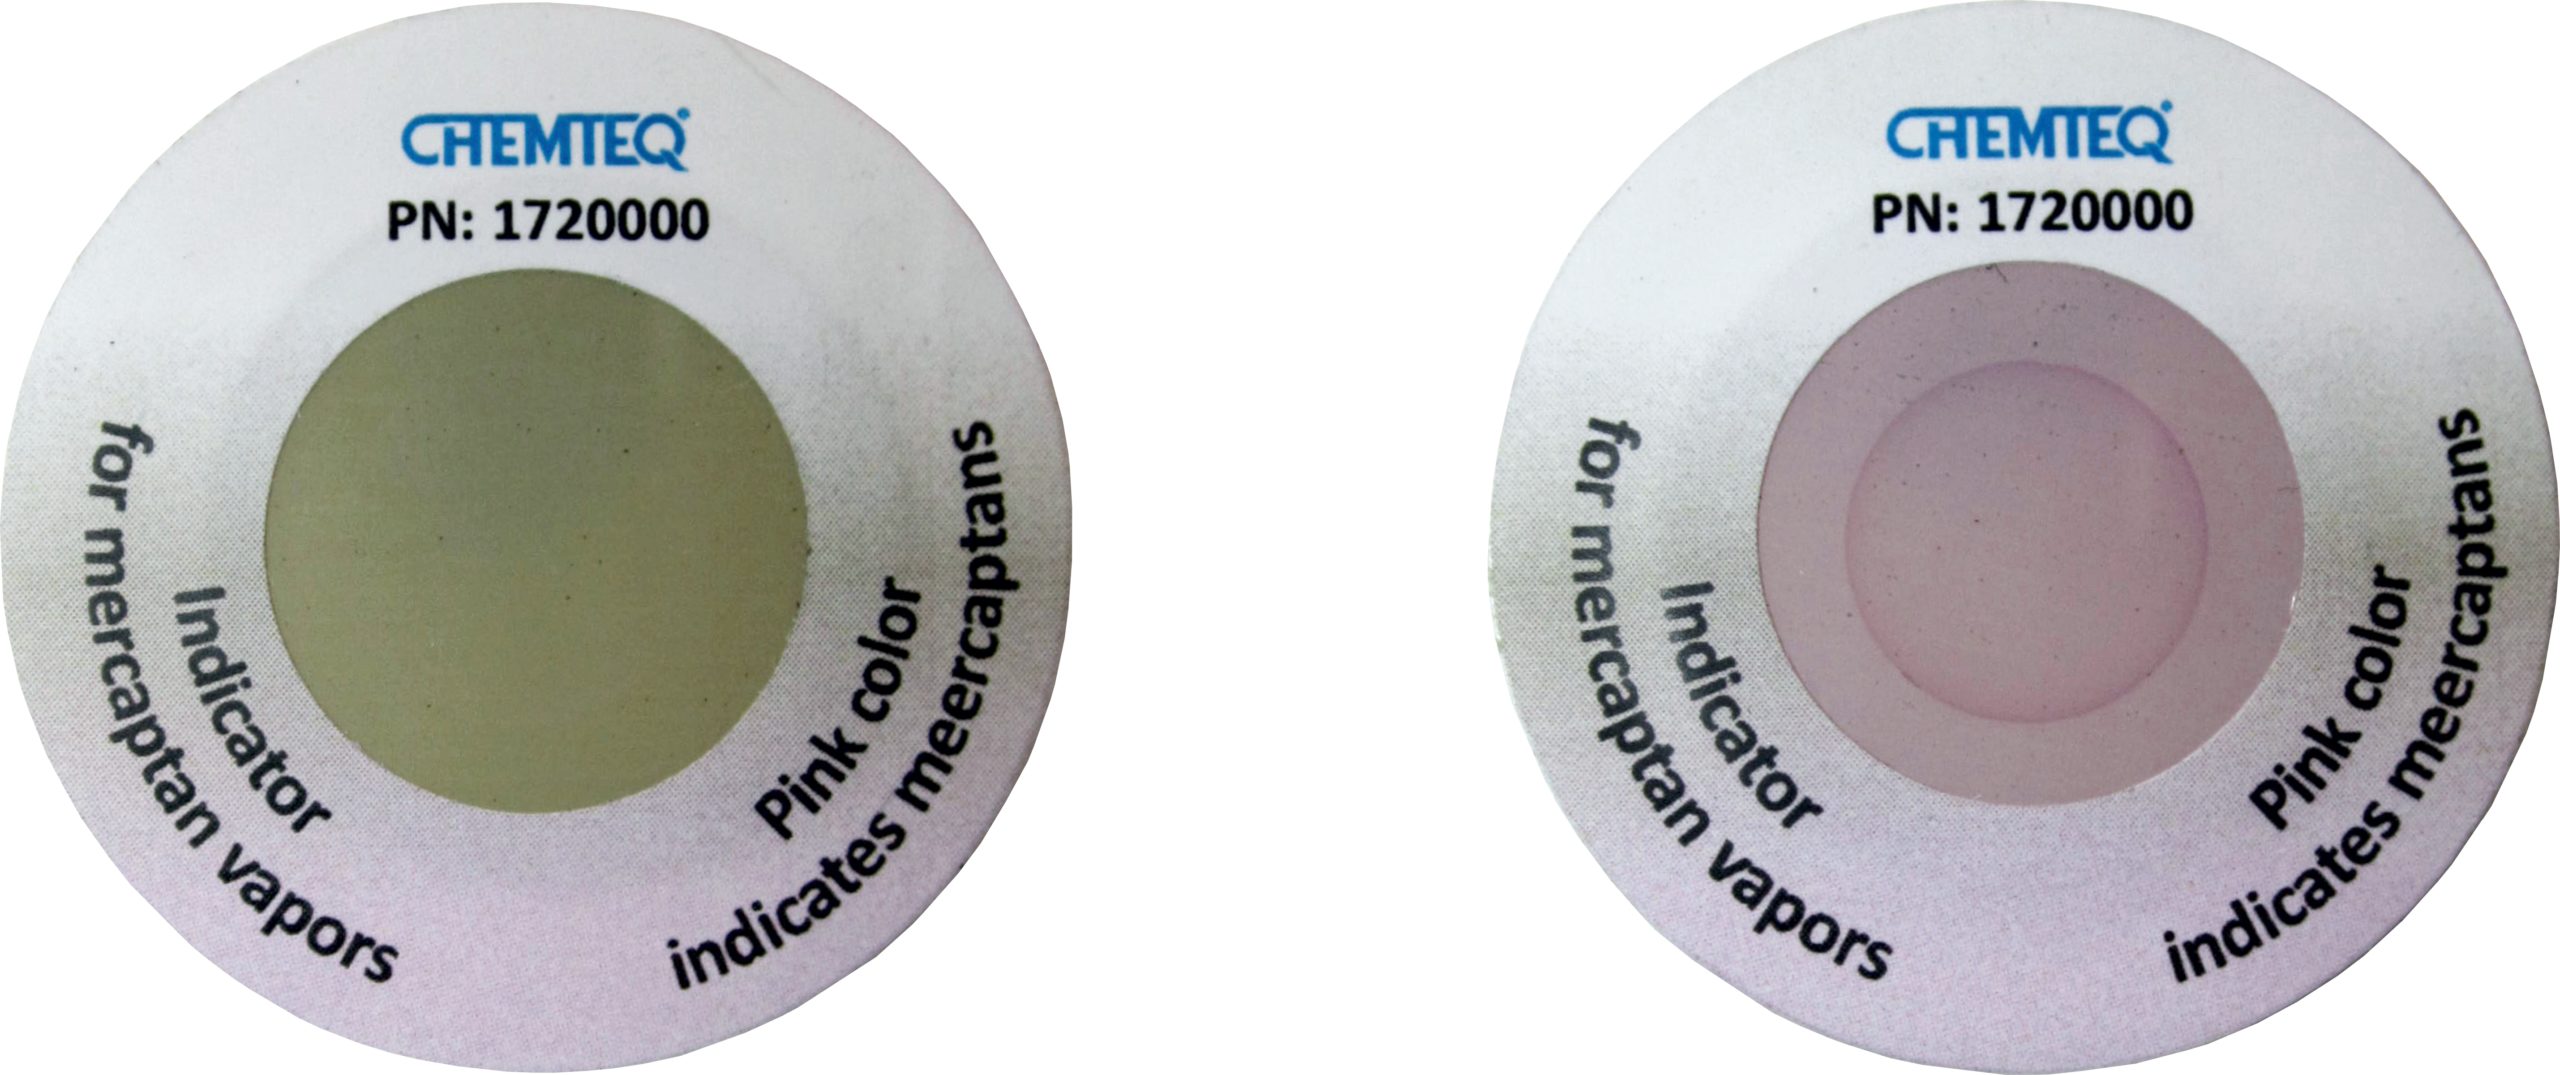 Mercaptans Breakthrough Indicator Sticker for Sewer Manhole filters